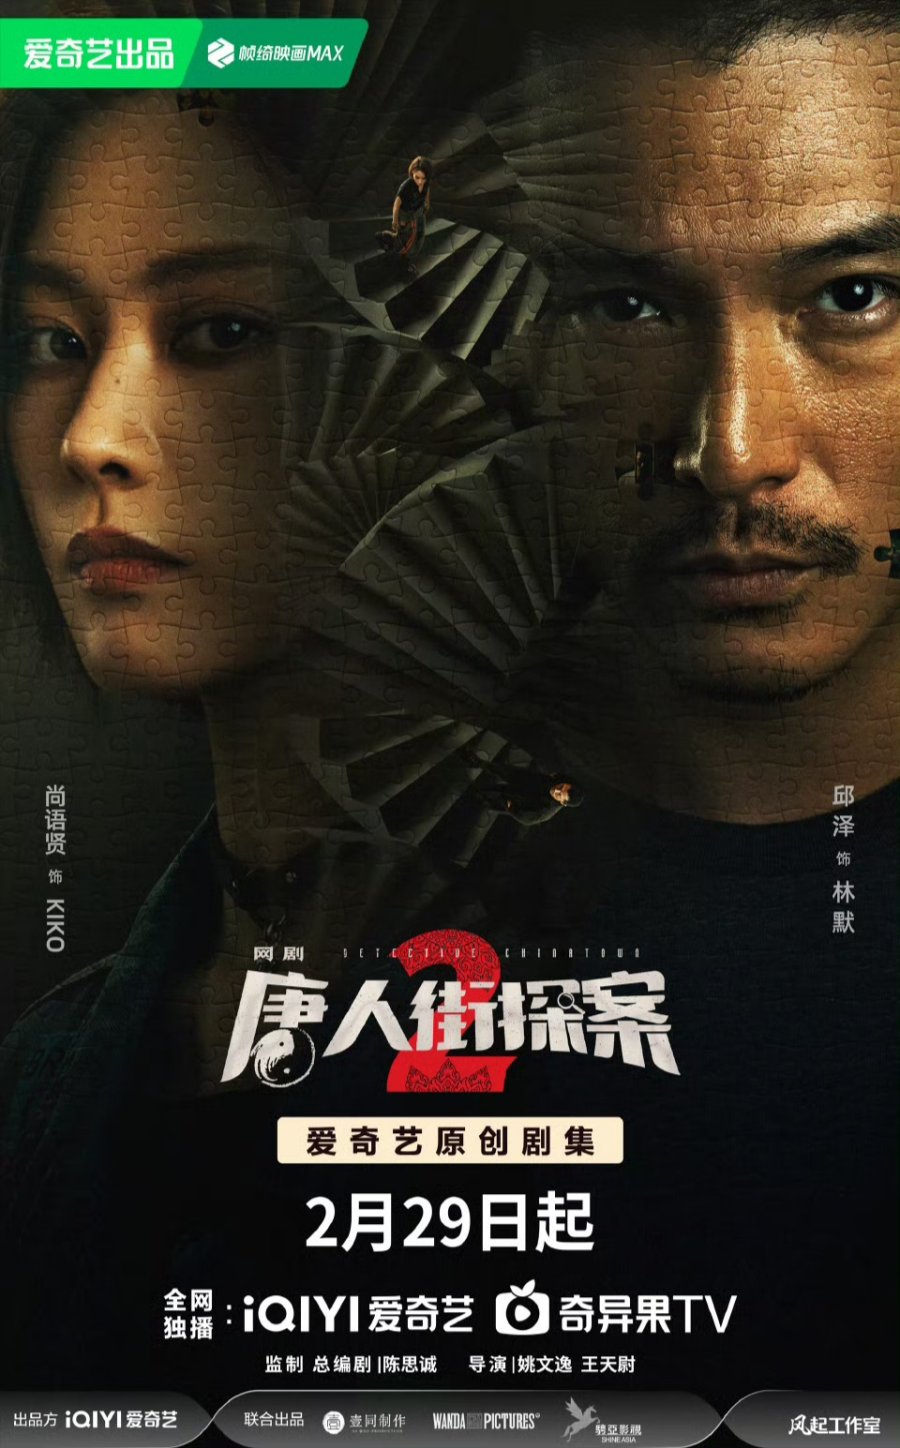 دانلود سریال چینی Detective Chinatown Season 2 / سریال چینی کاراگاه محله چینی ها فصل دوم 